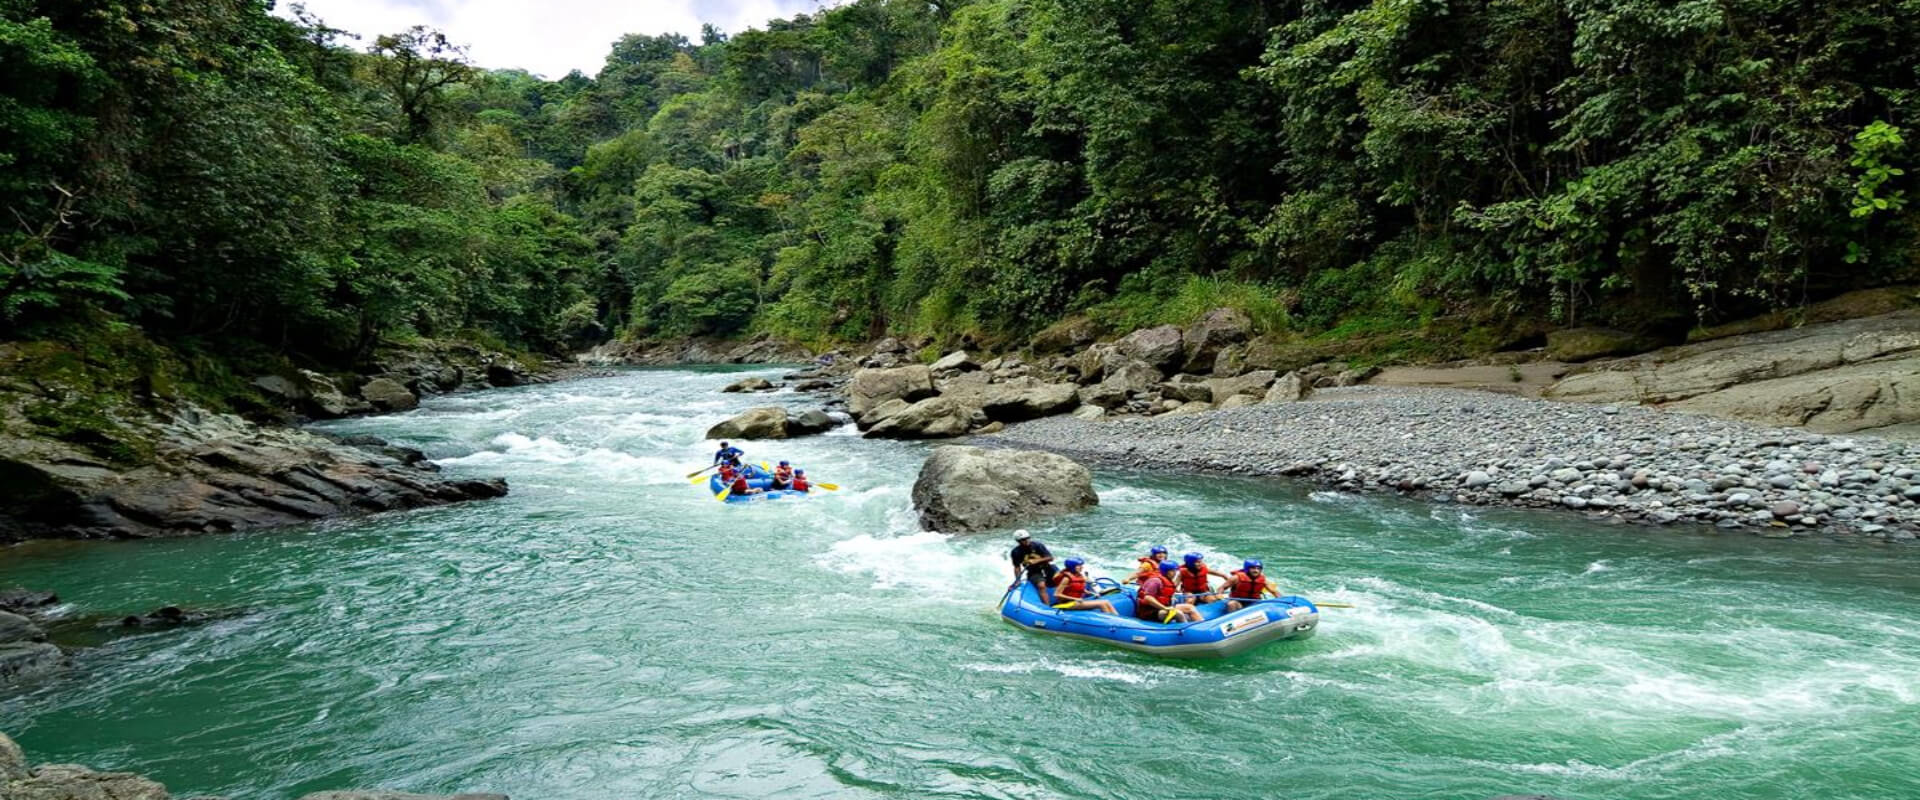 Rafting en Río Pacuare - 2 días | Costa Rica Jade Tours